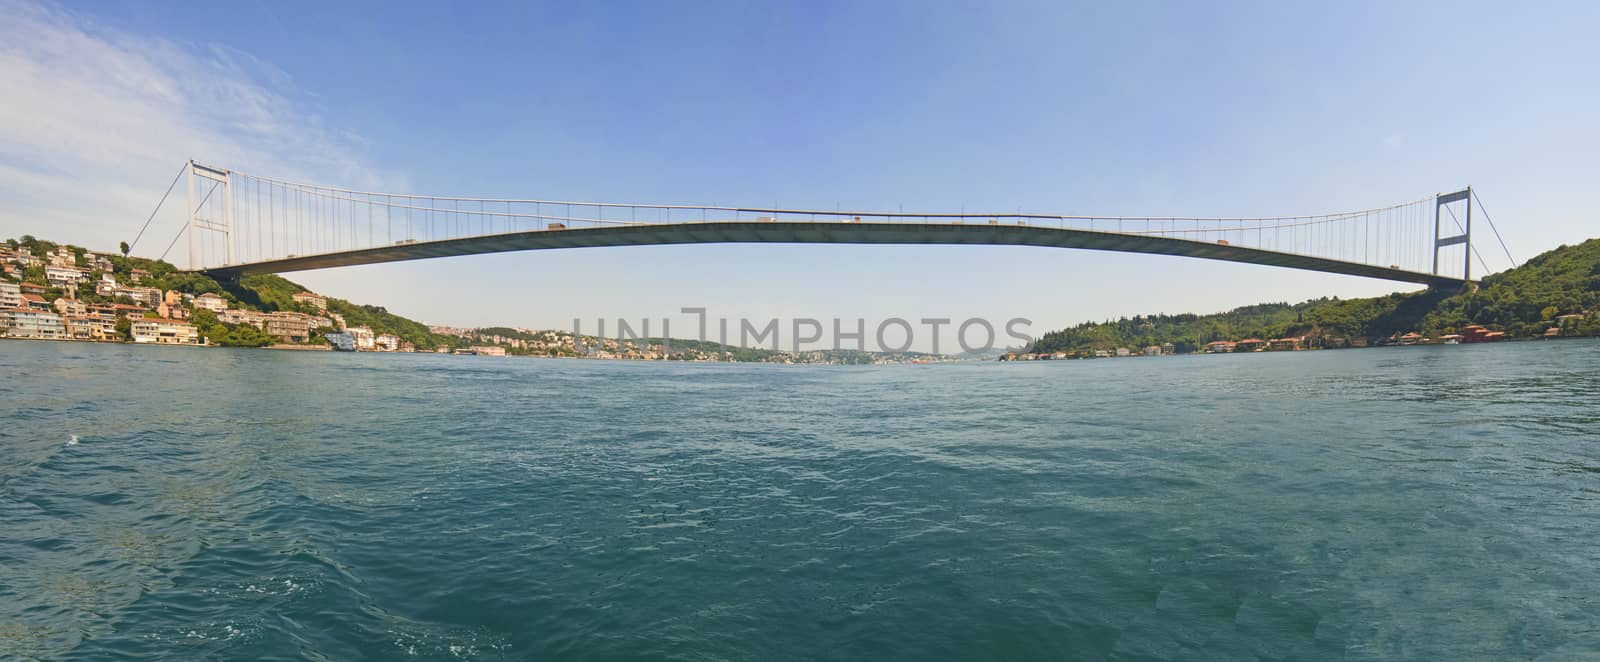 Ataturk suspension bridge spanning the Bosphorus river in Istanbul, Turkey against a blue sky